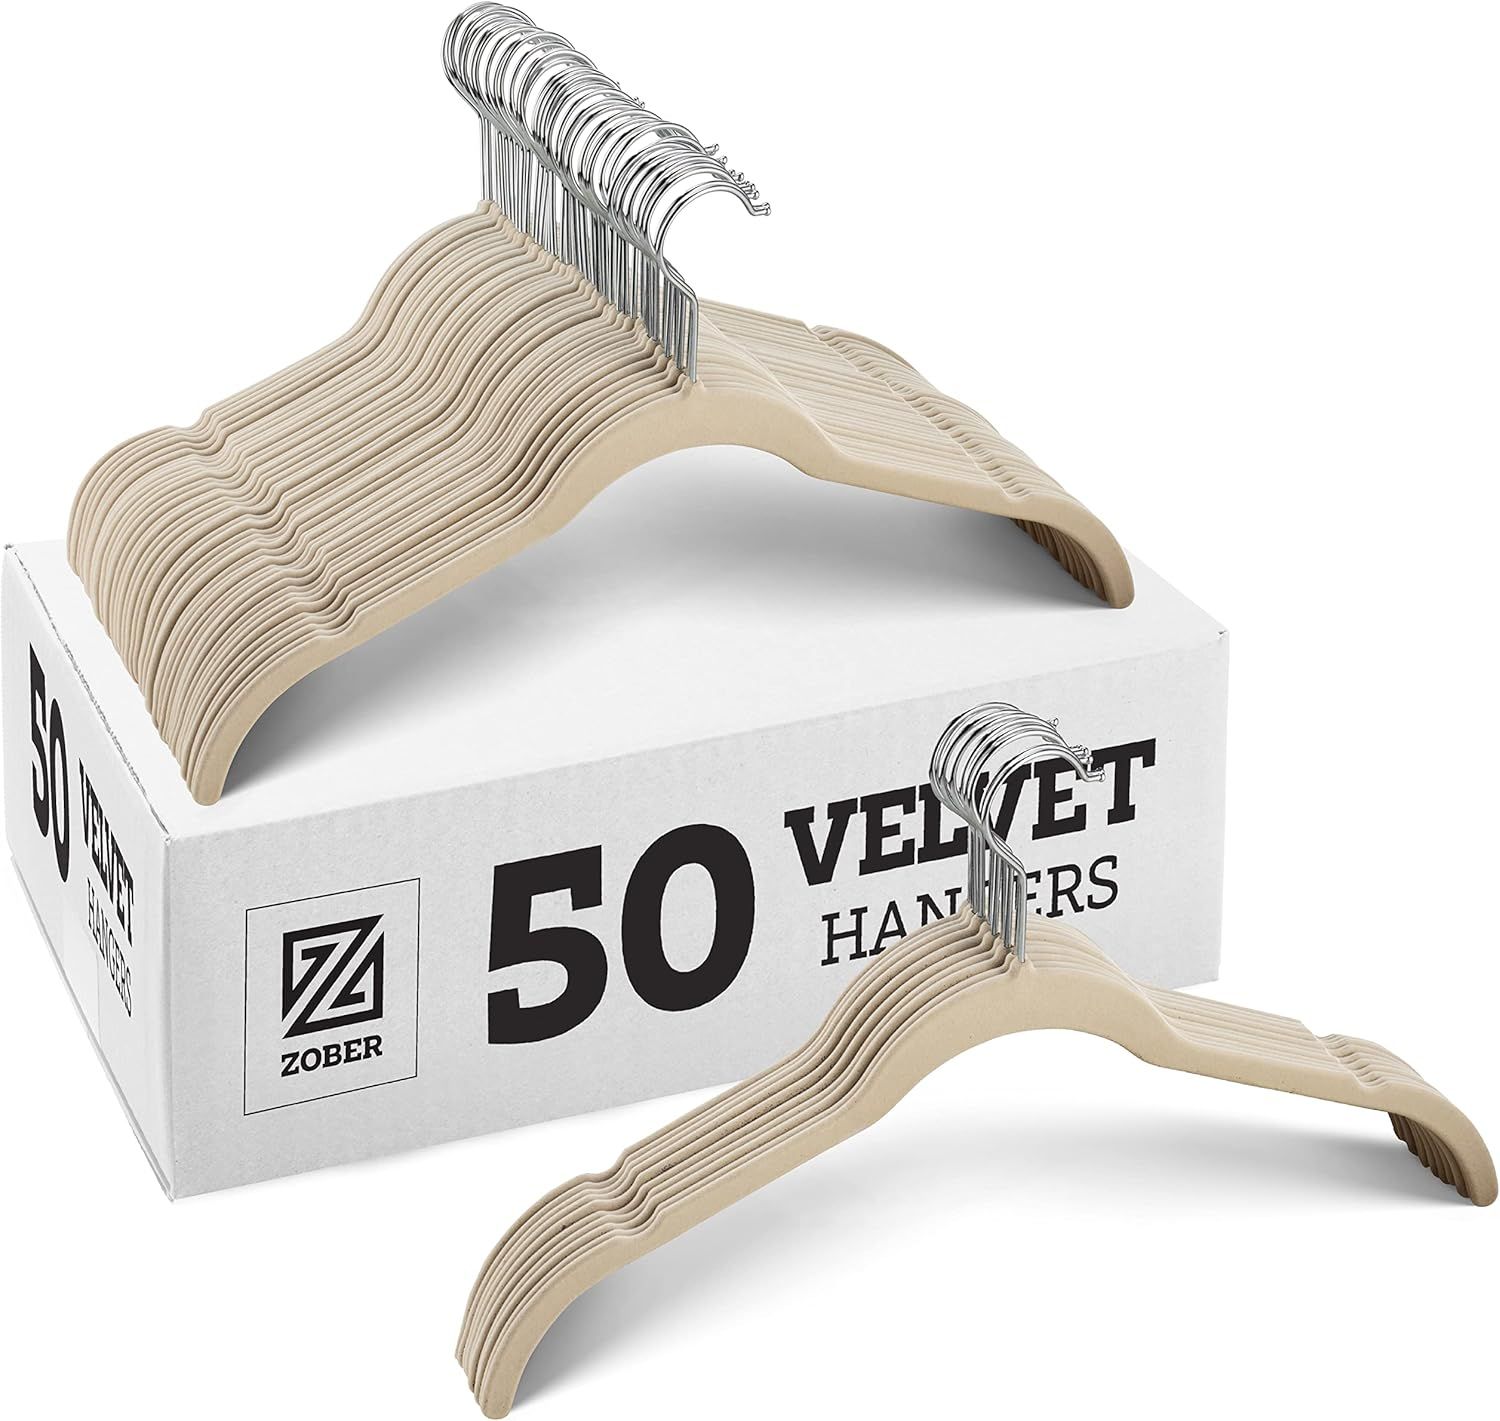 Premium Velvet Shirt Hangers (50 Pack) Non Slip Clothes Hangers, Ultra Slim Hangers Gain 50% Clos... | Amazon (US)